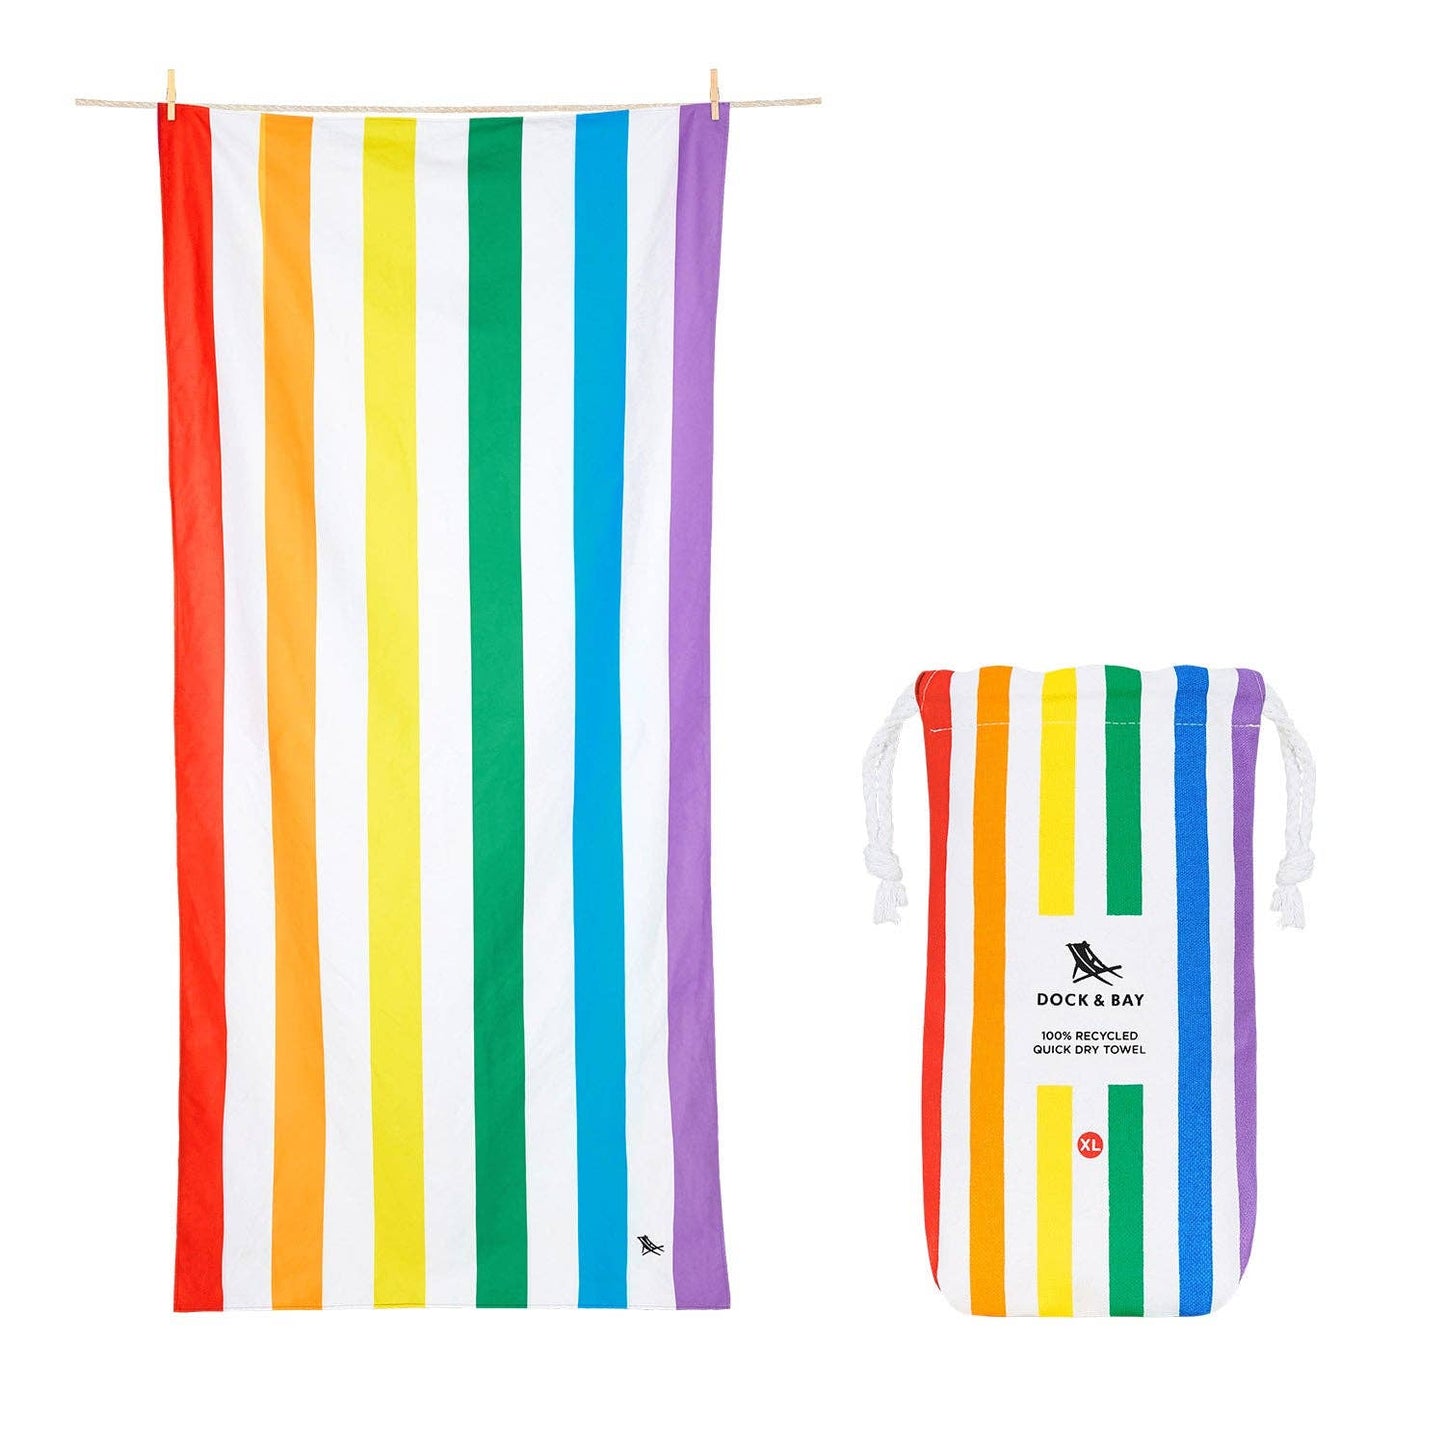 Dock & Bay Quick Dry Towels - Summer - Rainbow Skies